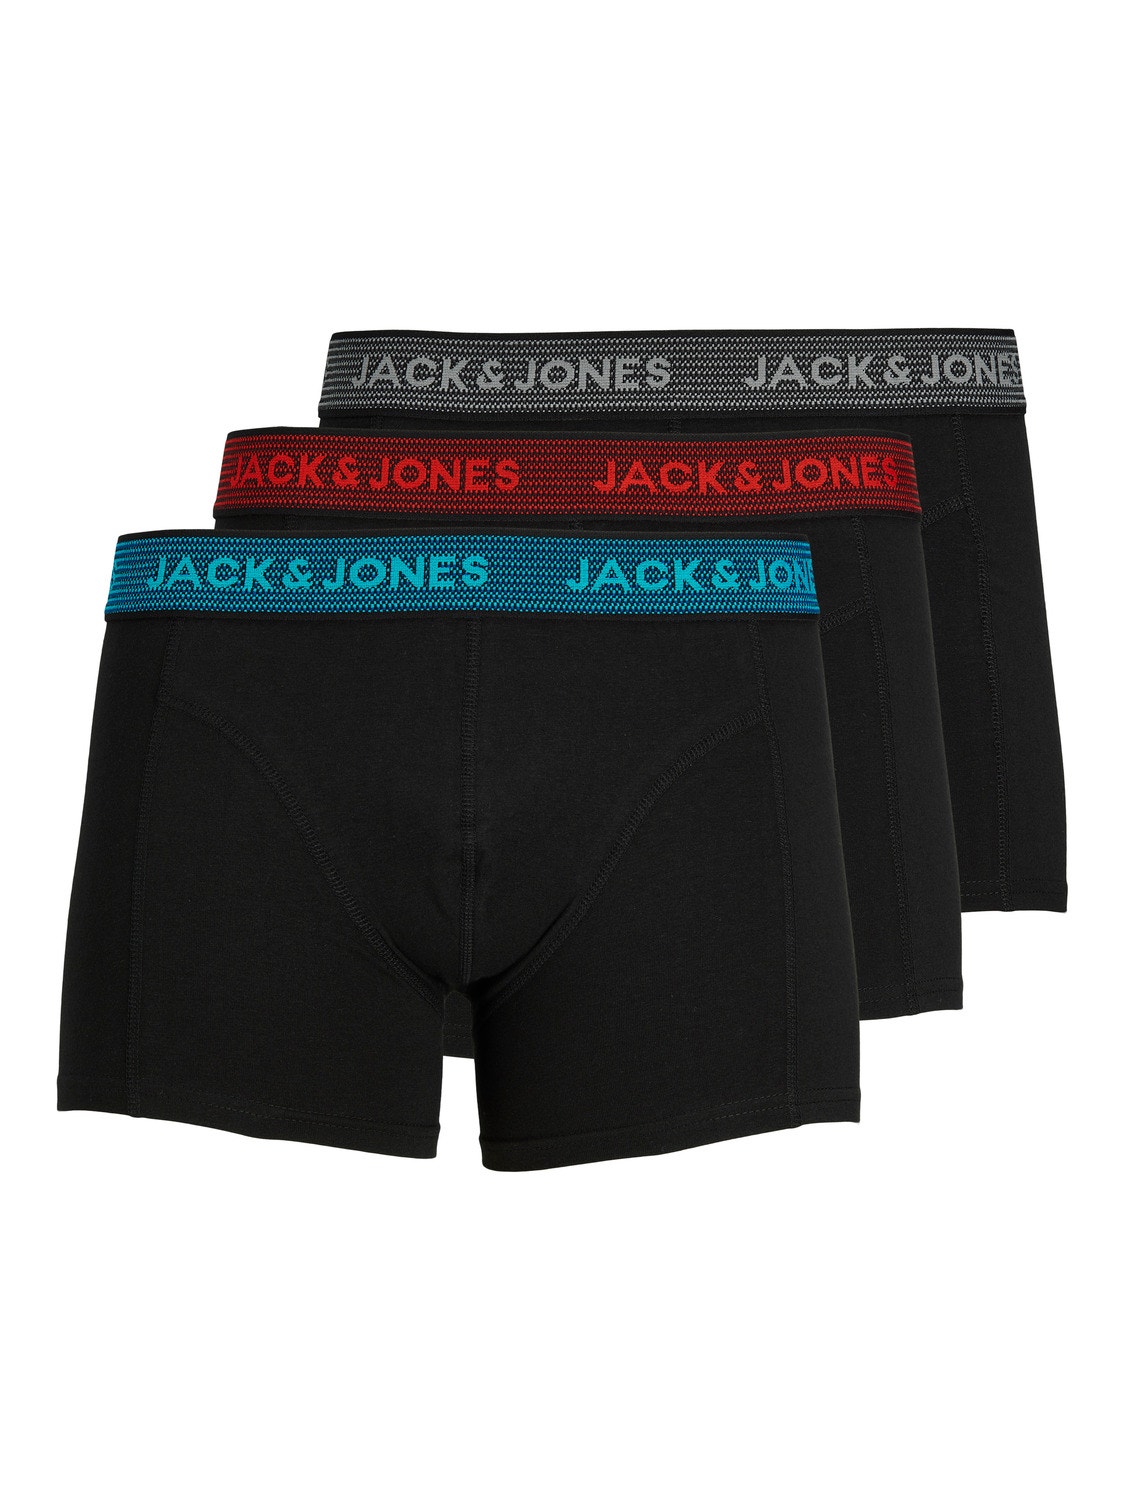 Jack & Jones 3 Trunks -Asphalt - 12127816